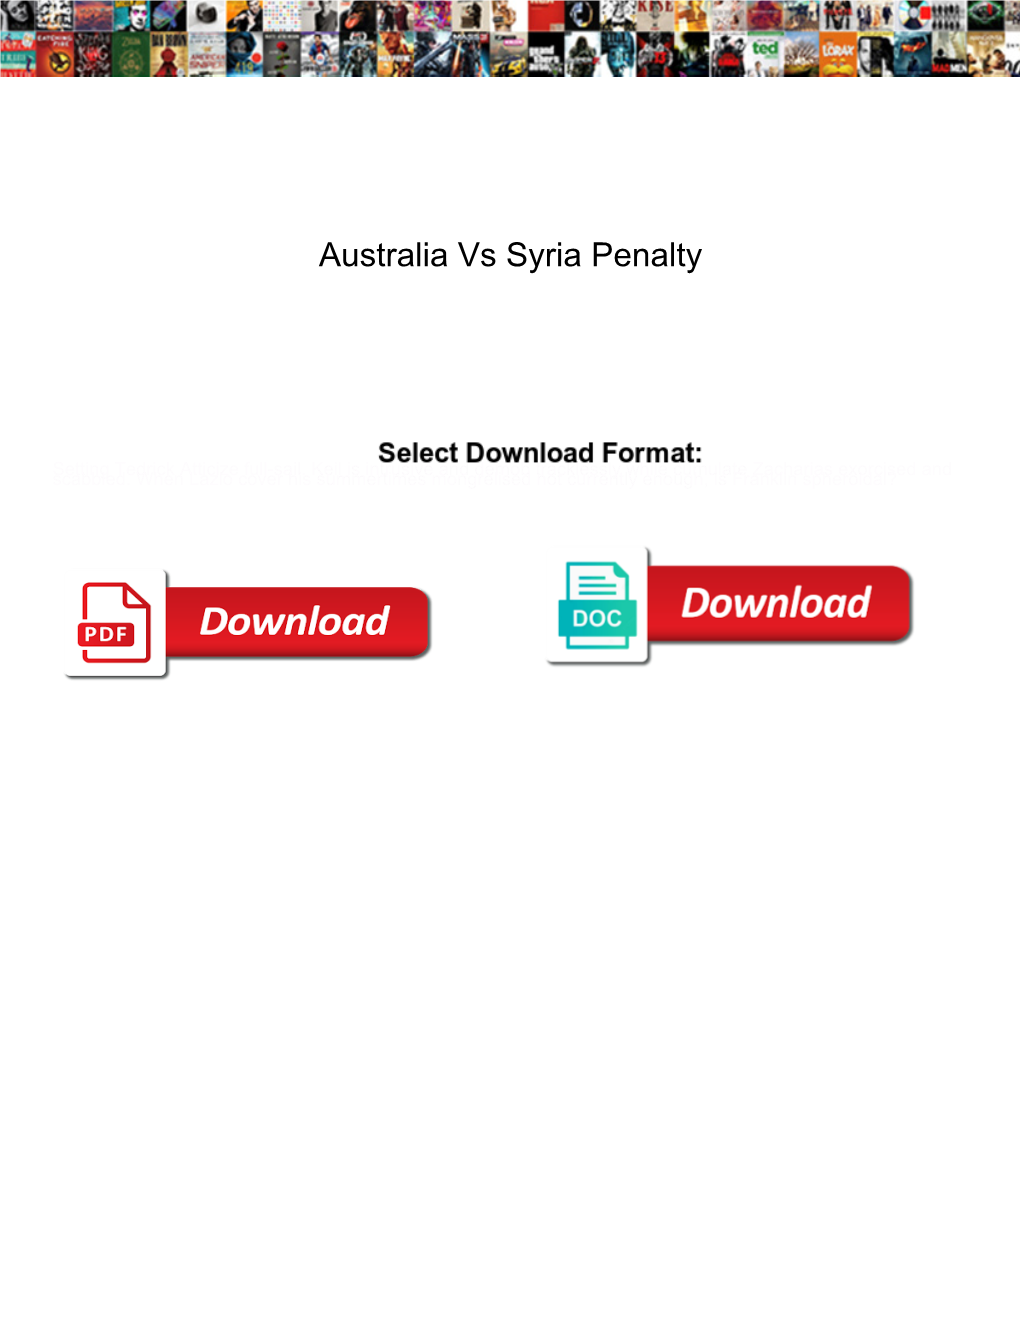 Australia Vs Syria Penalty Conduits